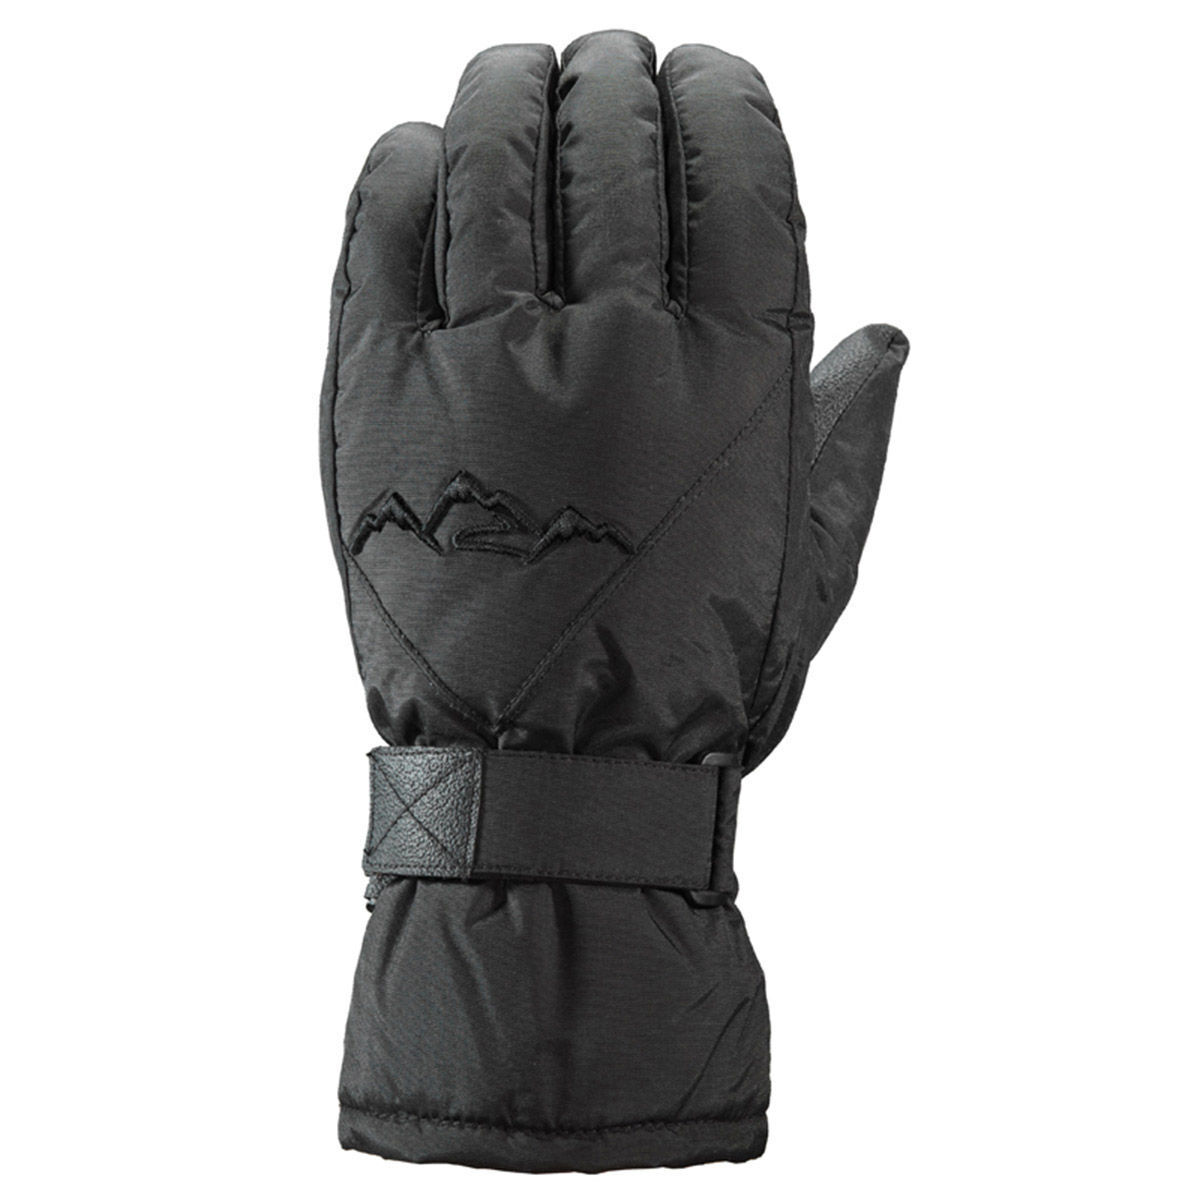 Seirus Men's Hi Visibility Mountain Challenger Gloves